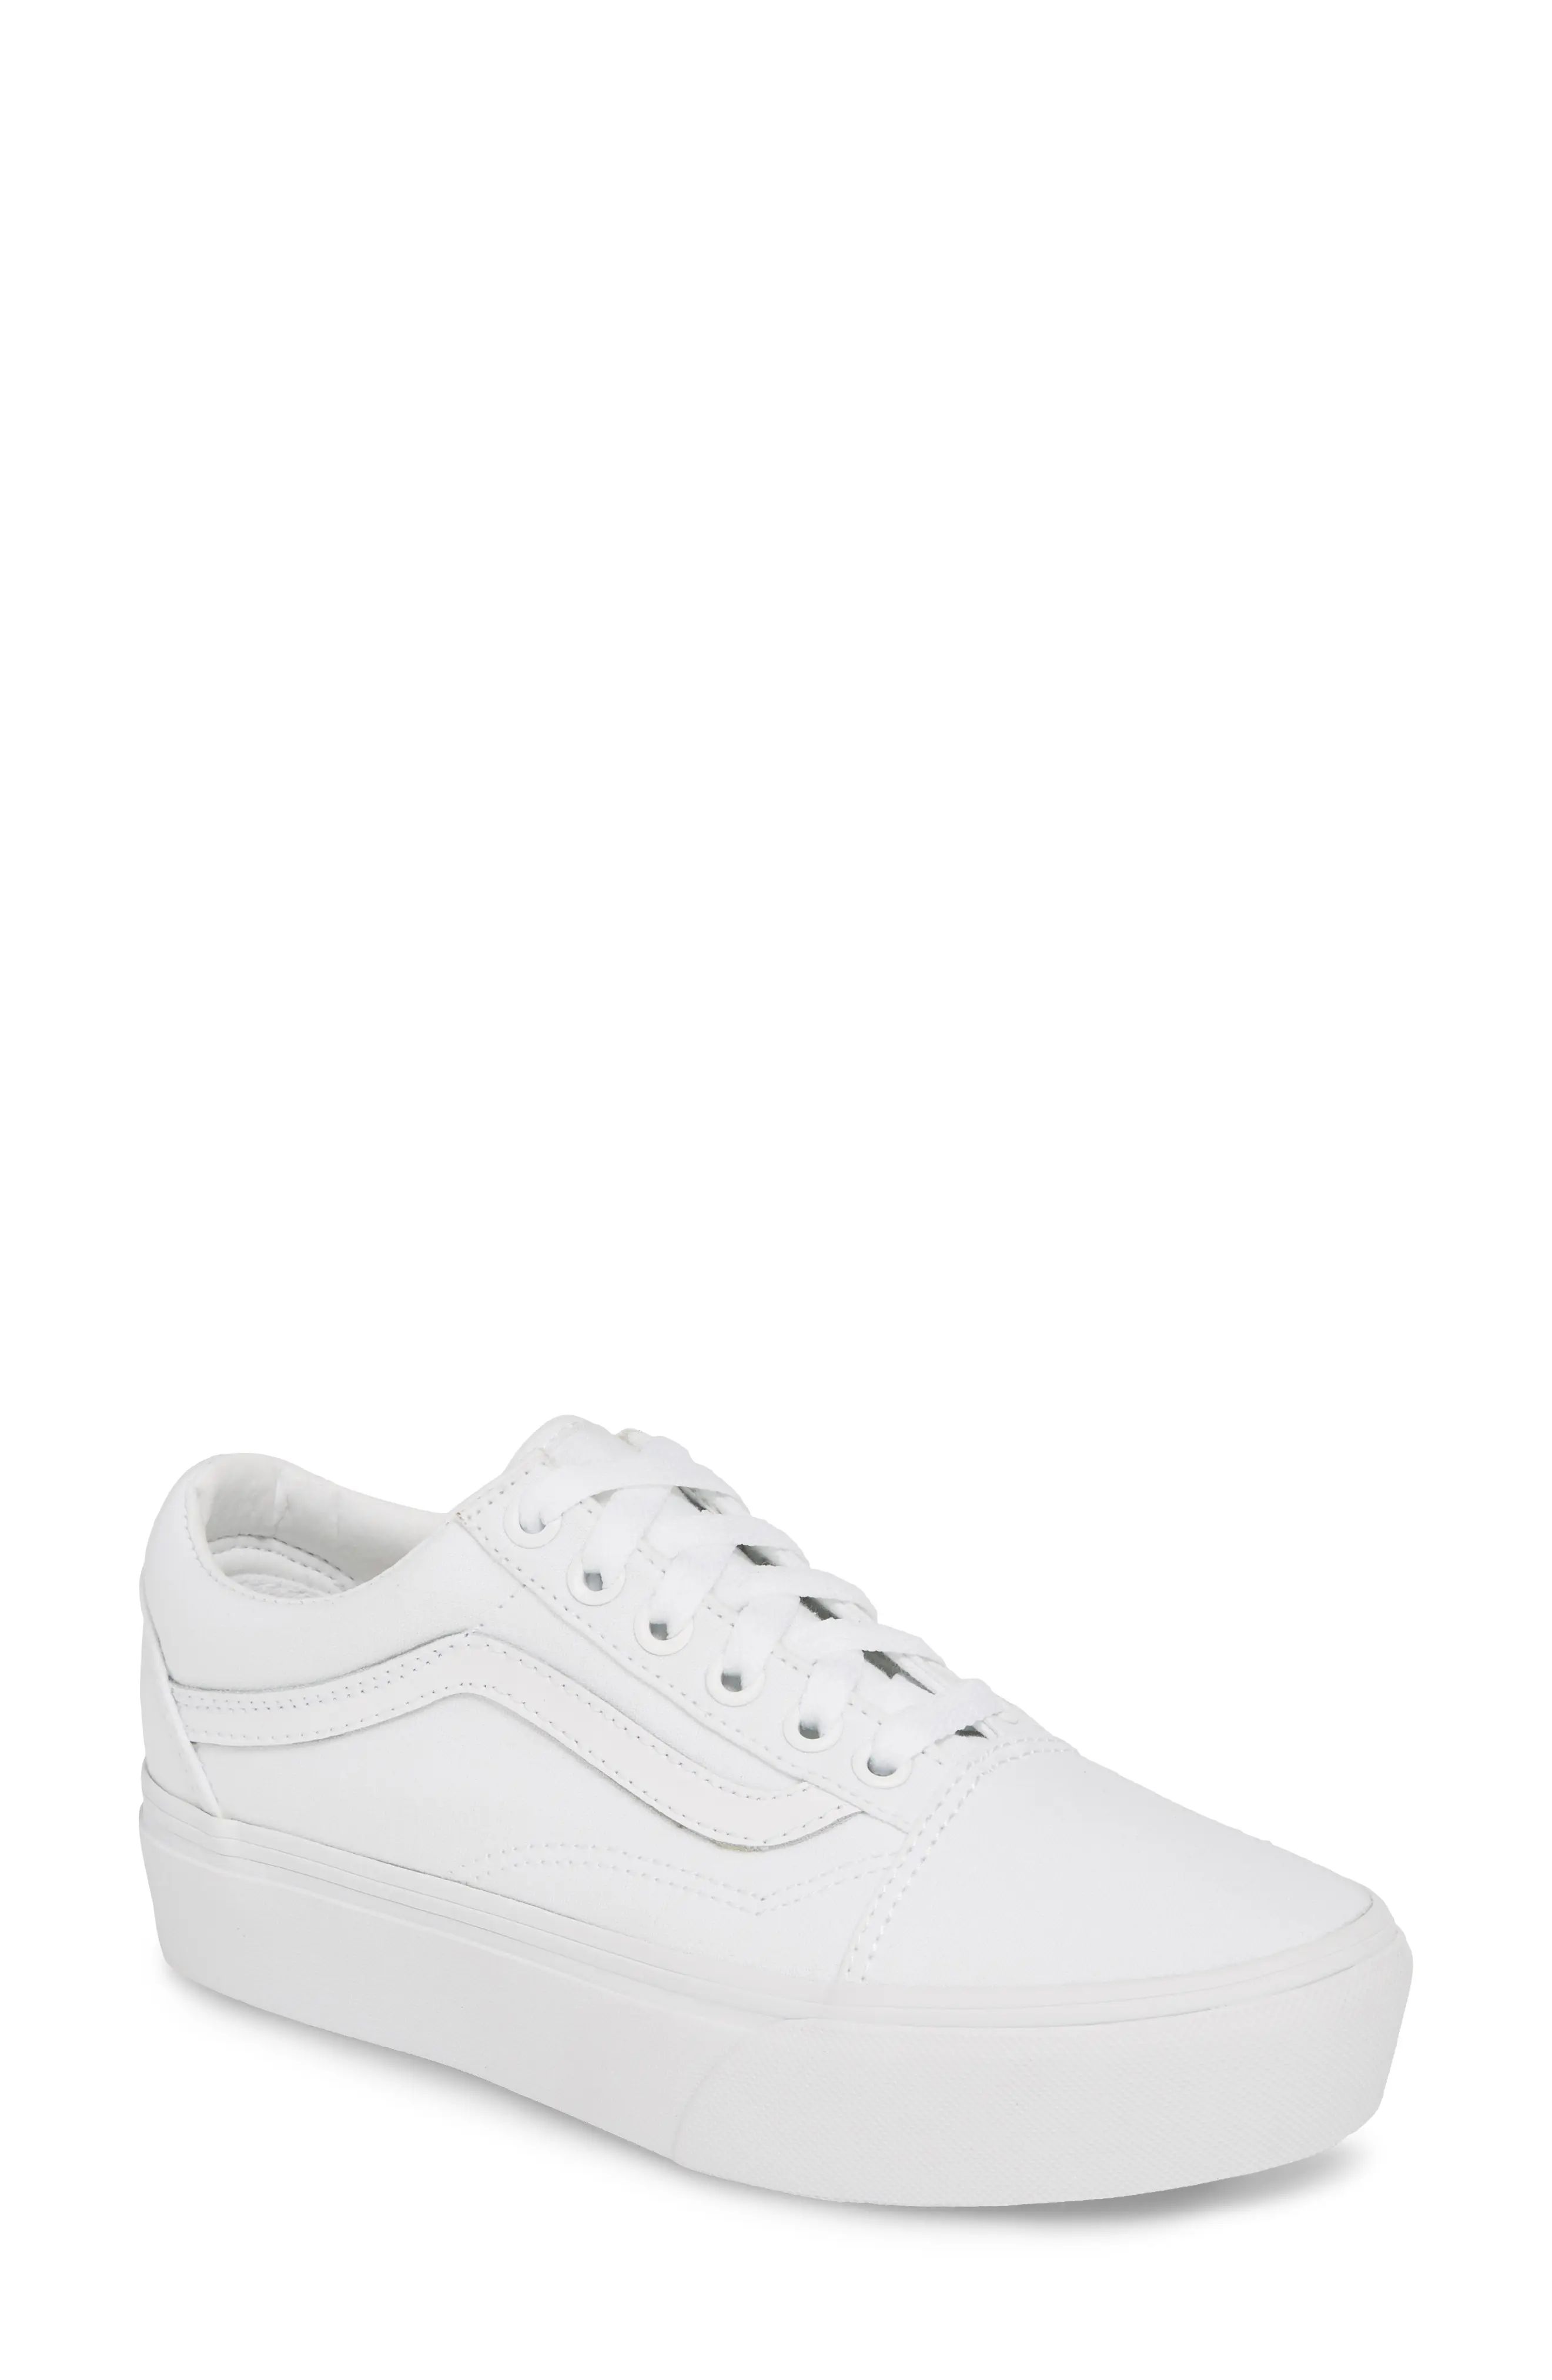 Women's Vans Old Skool Platform Sneaker, Size 7 M - White | Nordstrom